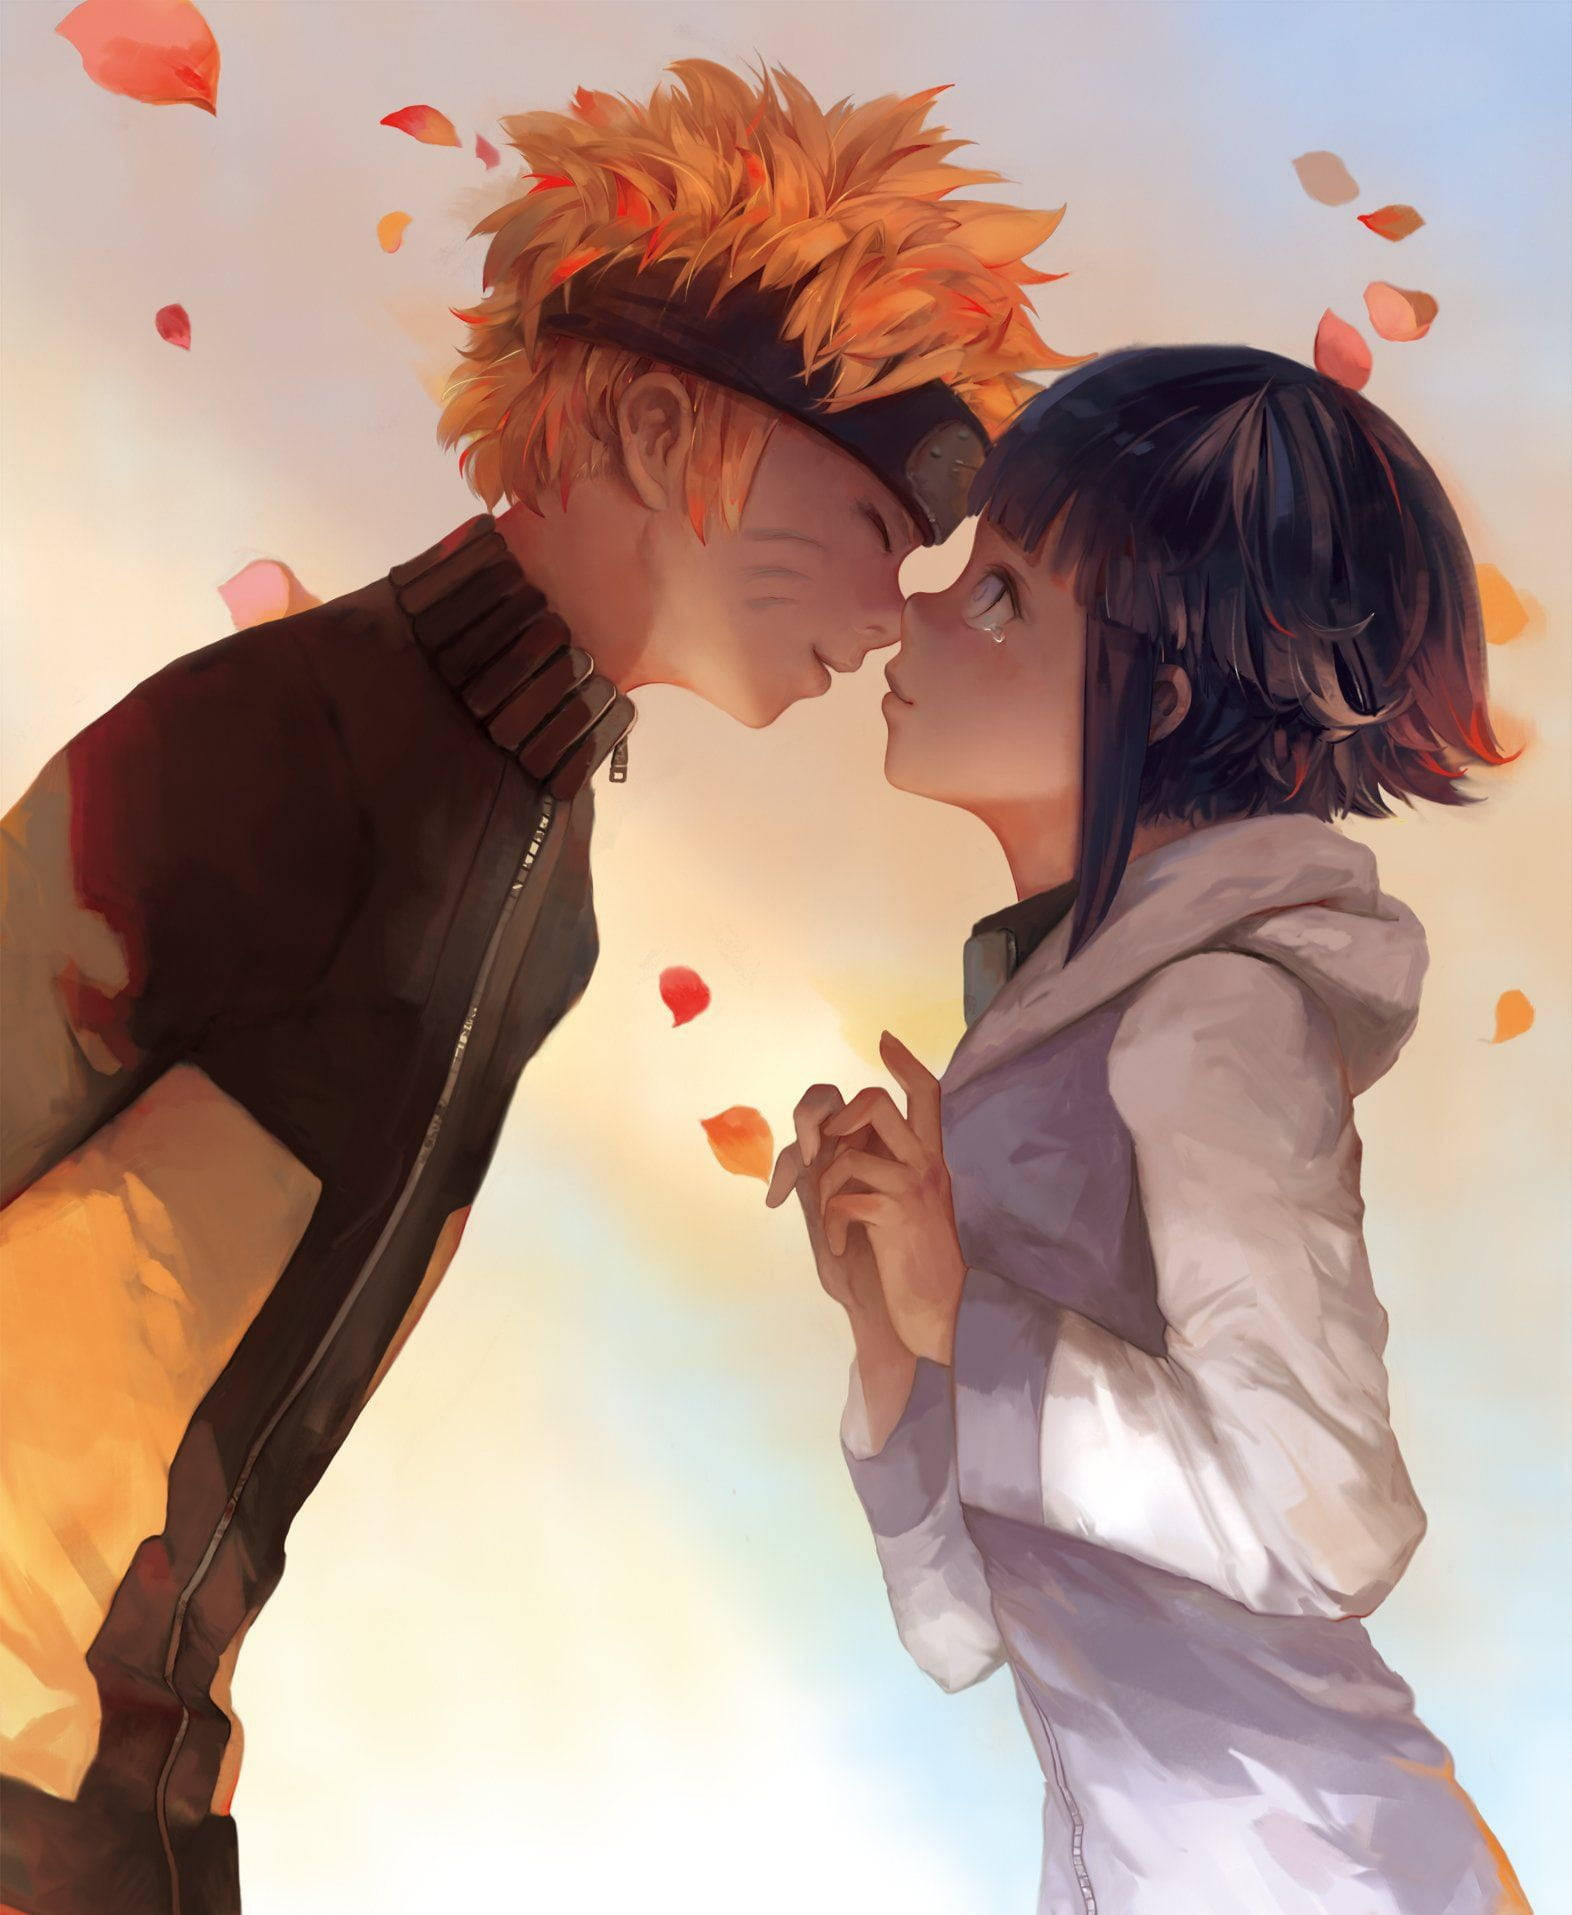 Anime Couple Kiss From Naruto Shippuden Wallpaper